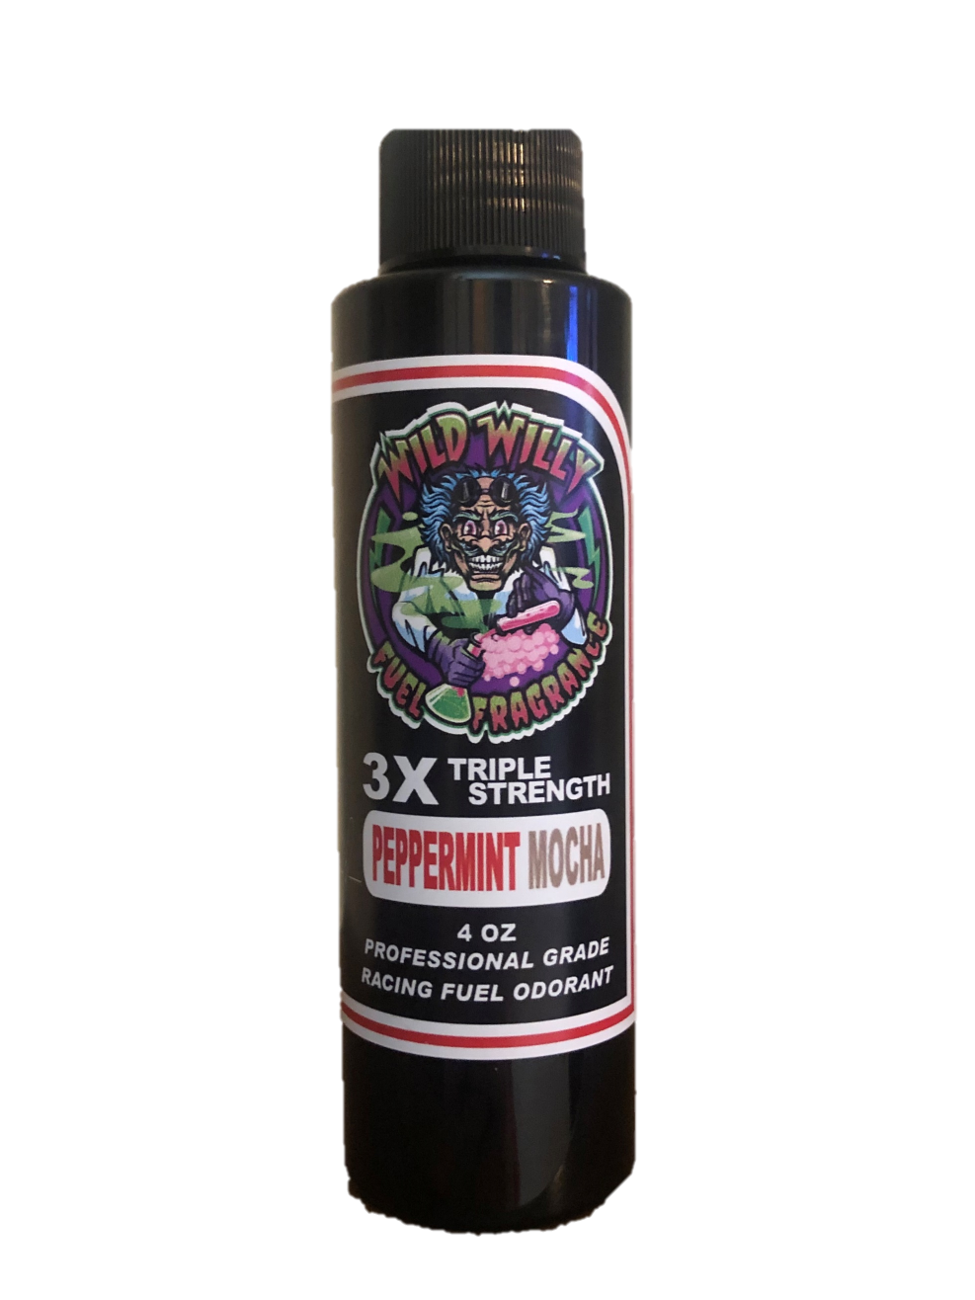 Peppermint Mocha - Wild Willy Fuel Fragrance - 3X Triple Strength!